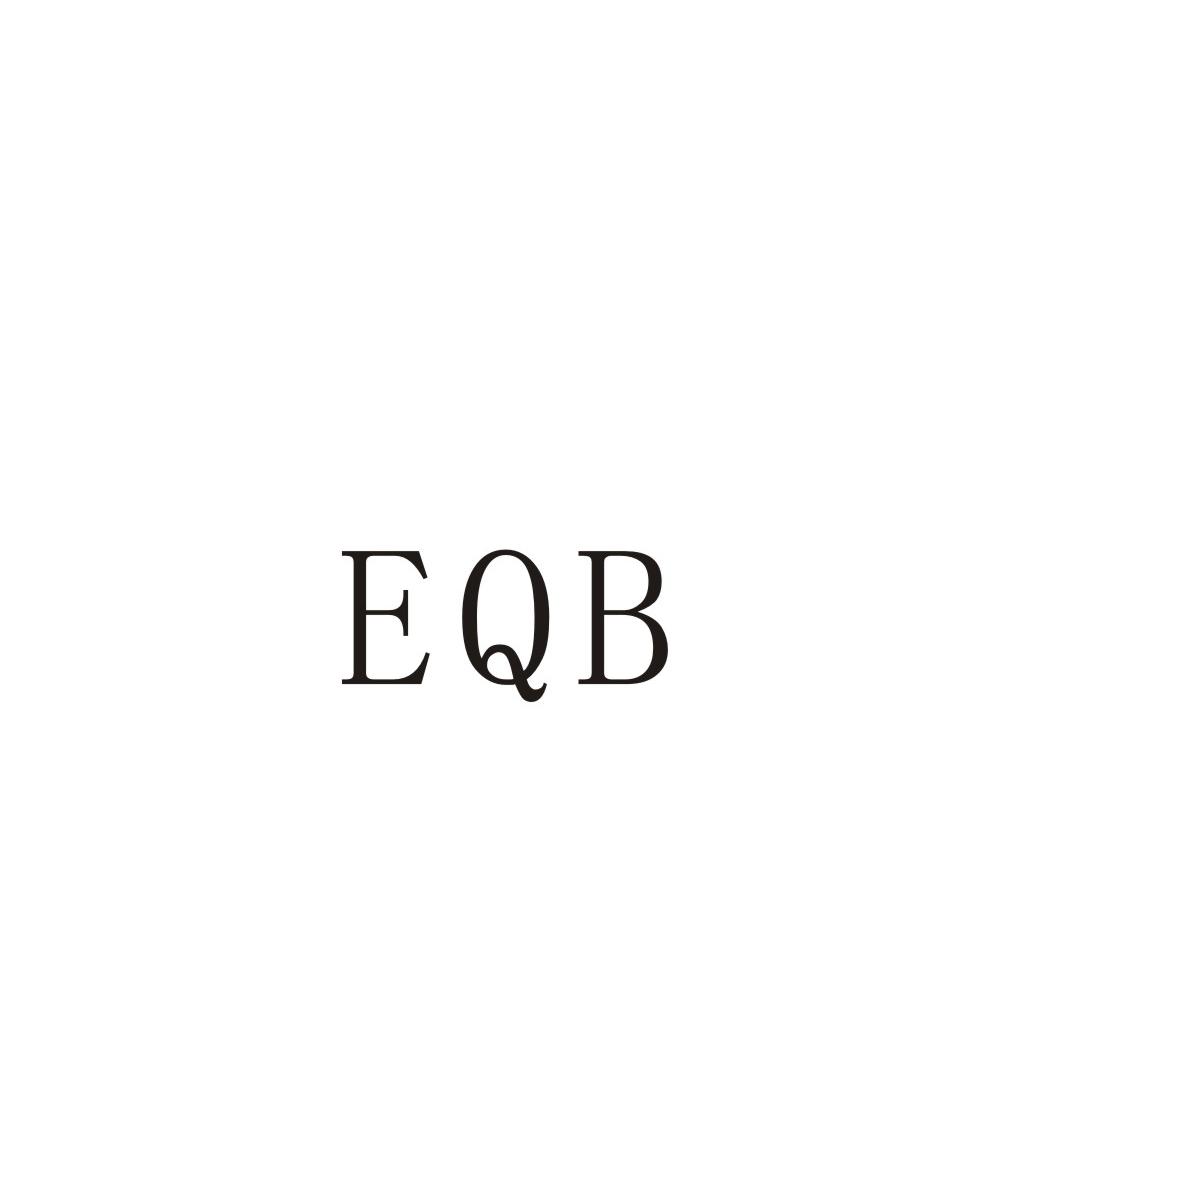 EQB